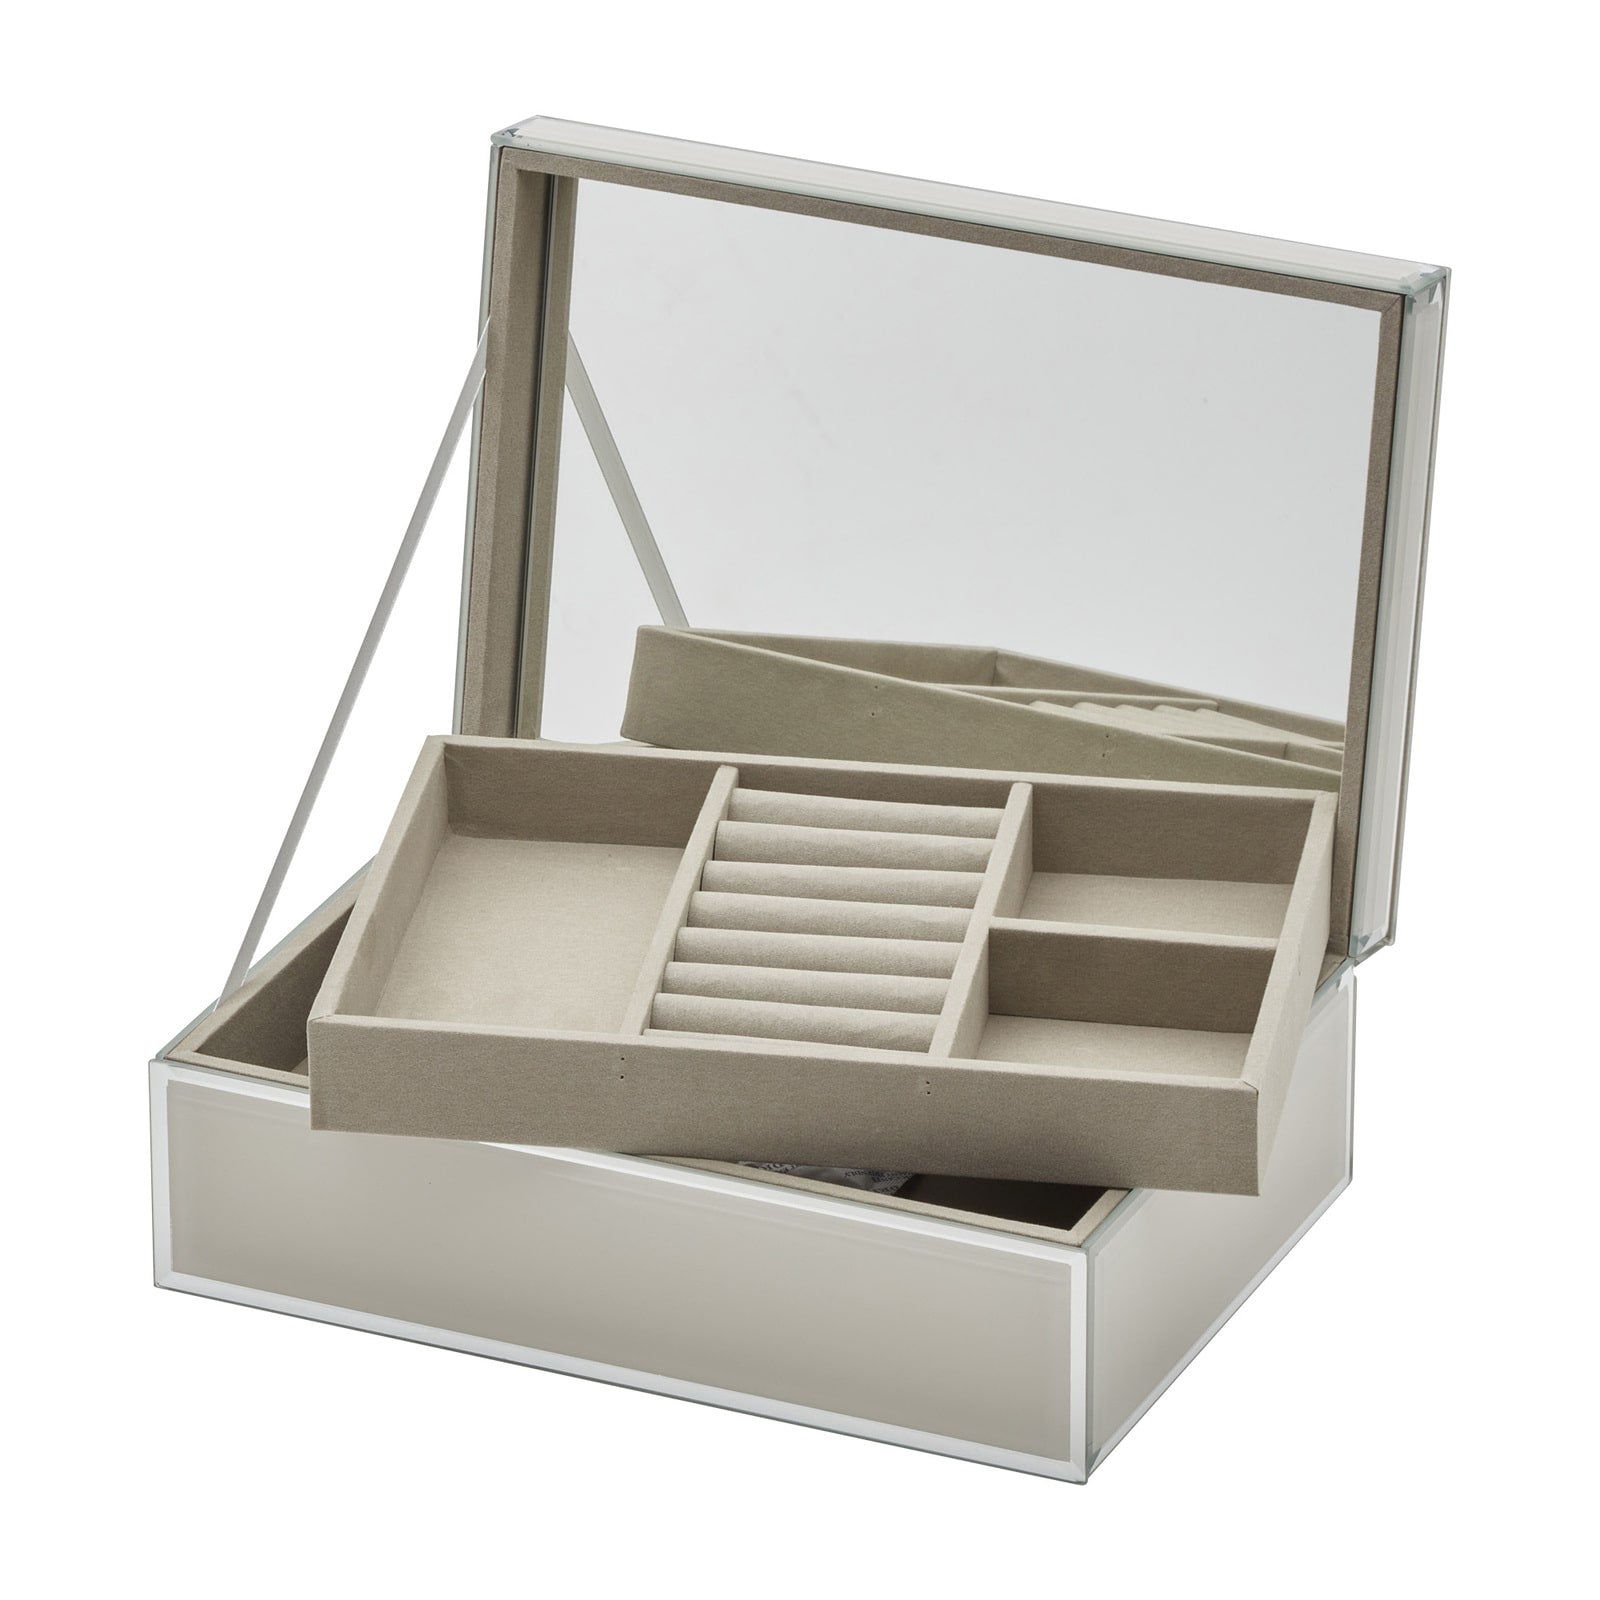 Sara Large Jewellery Box - Nude - box open, showing tray